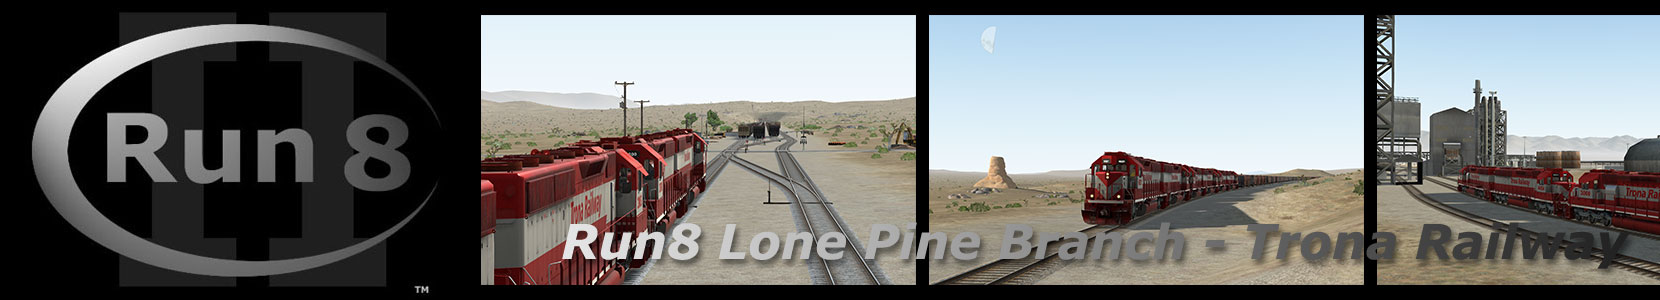 Run8 Train Simulator Lone Pine Branch - Trona Railway